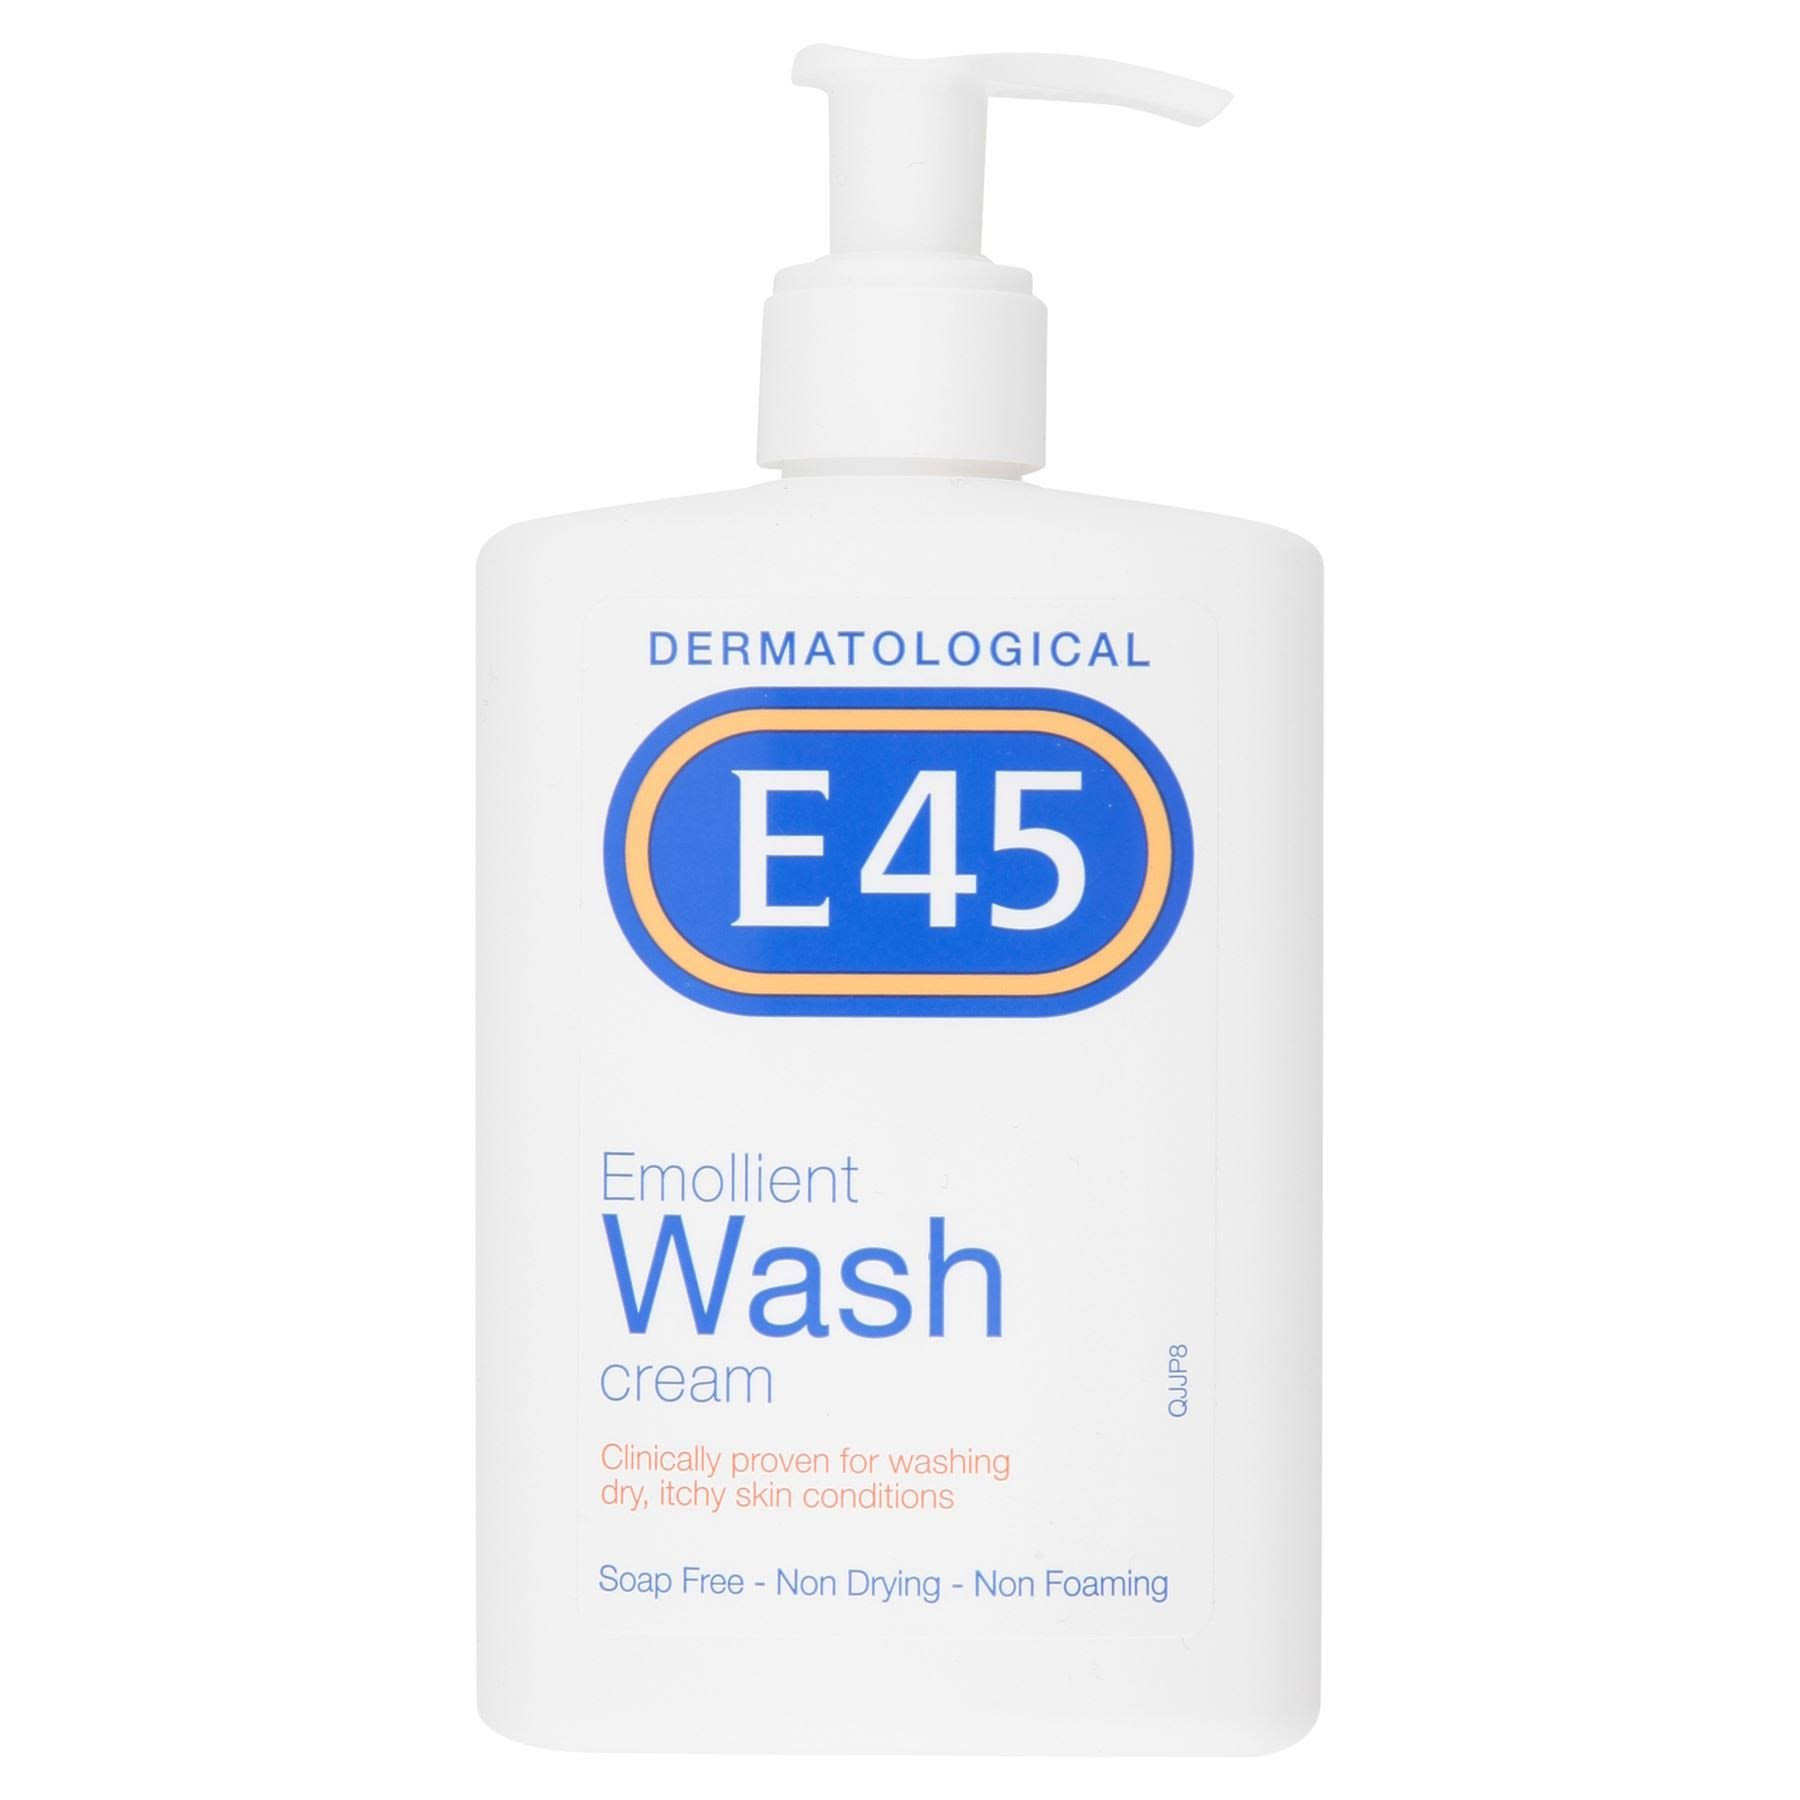 E45 Dermatological Emollient Wash Cream - 250ml